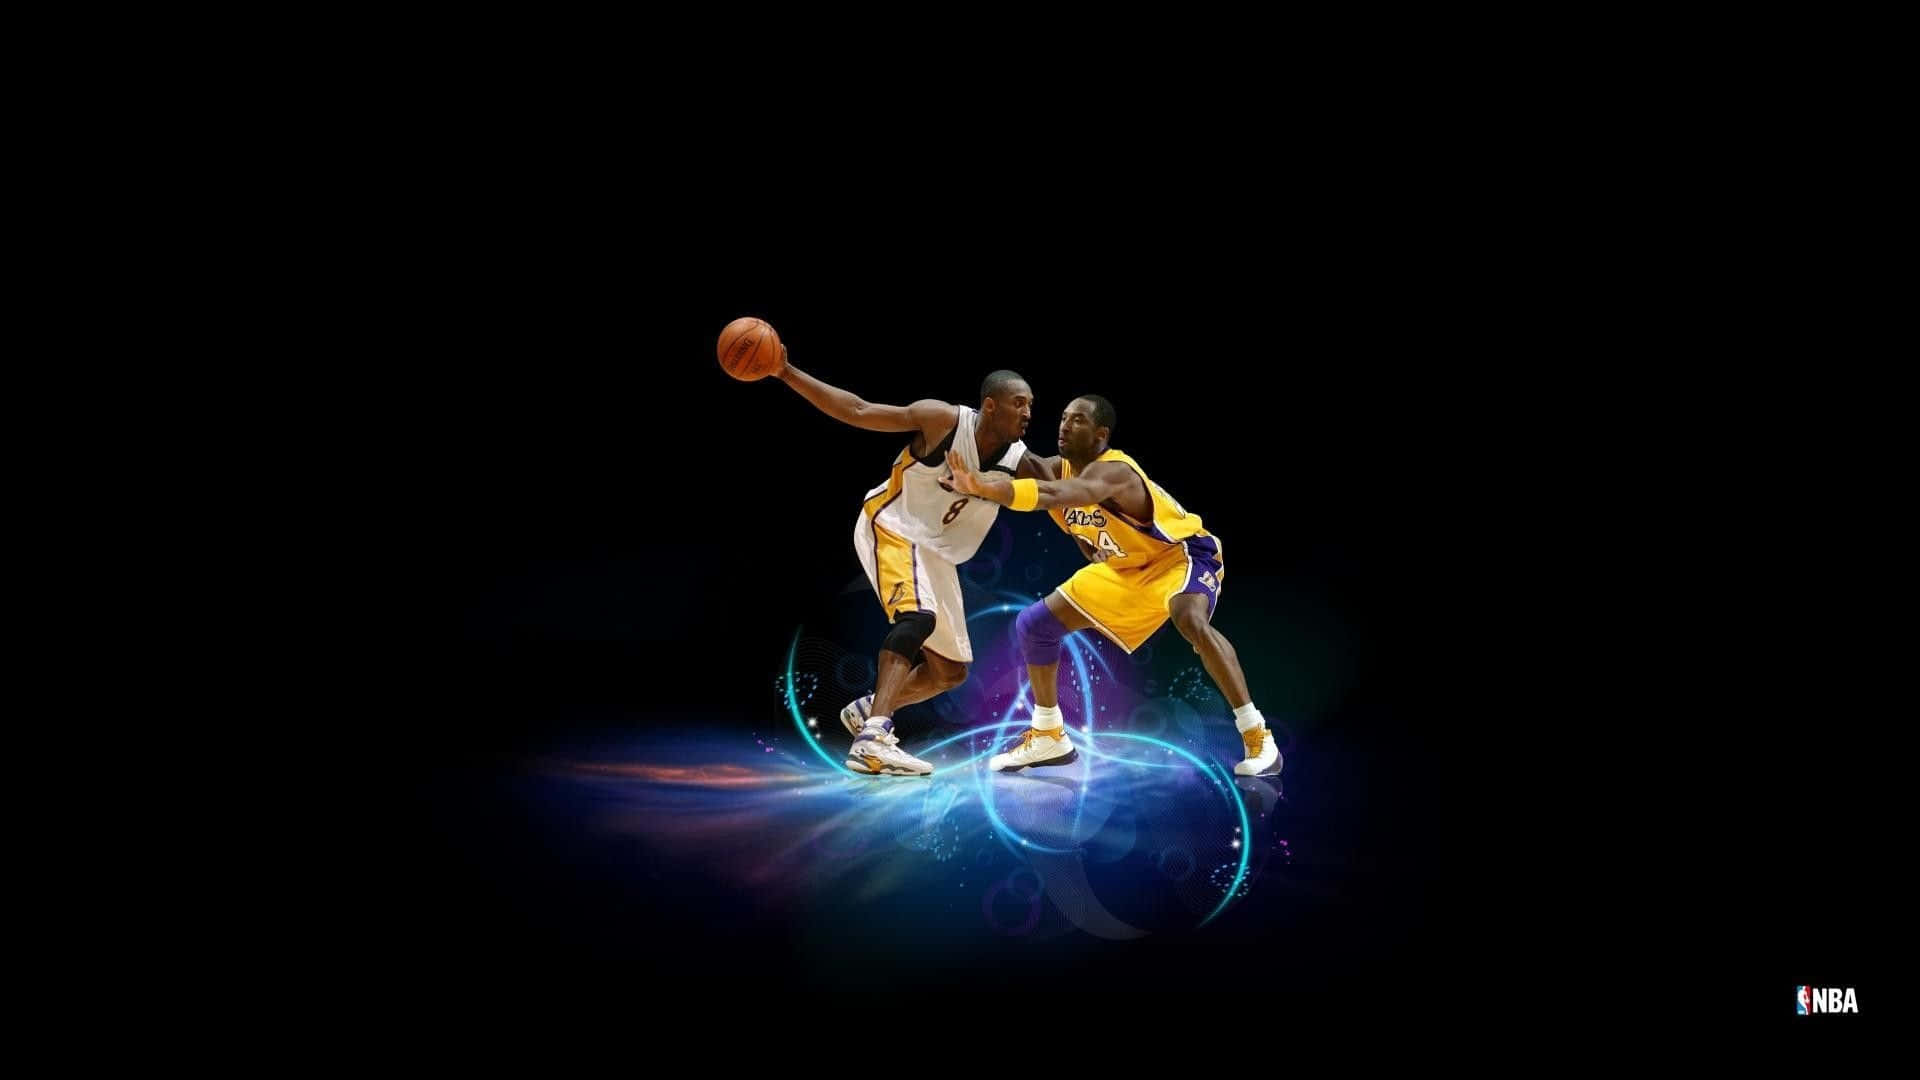 Kobe Bryant Basketball Digital Art Background